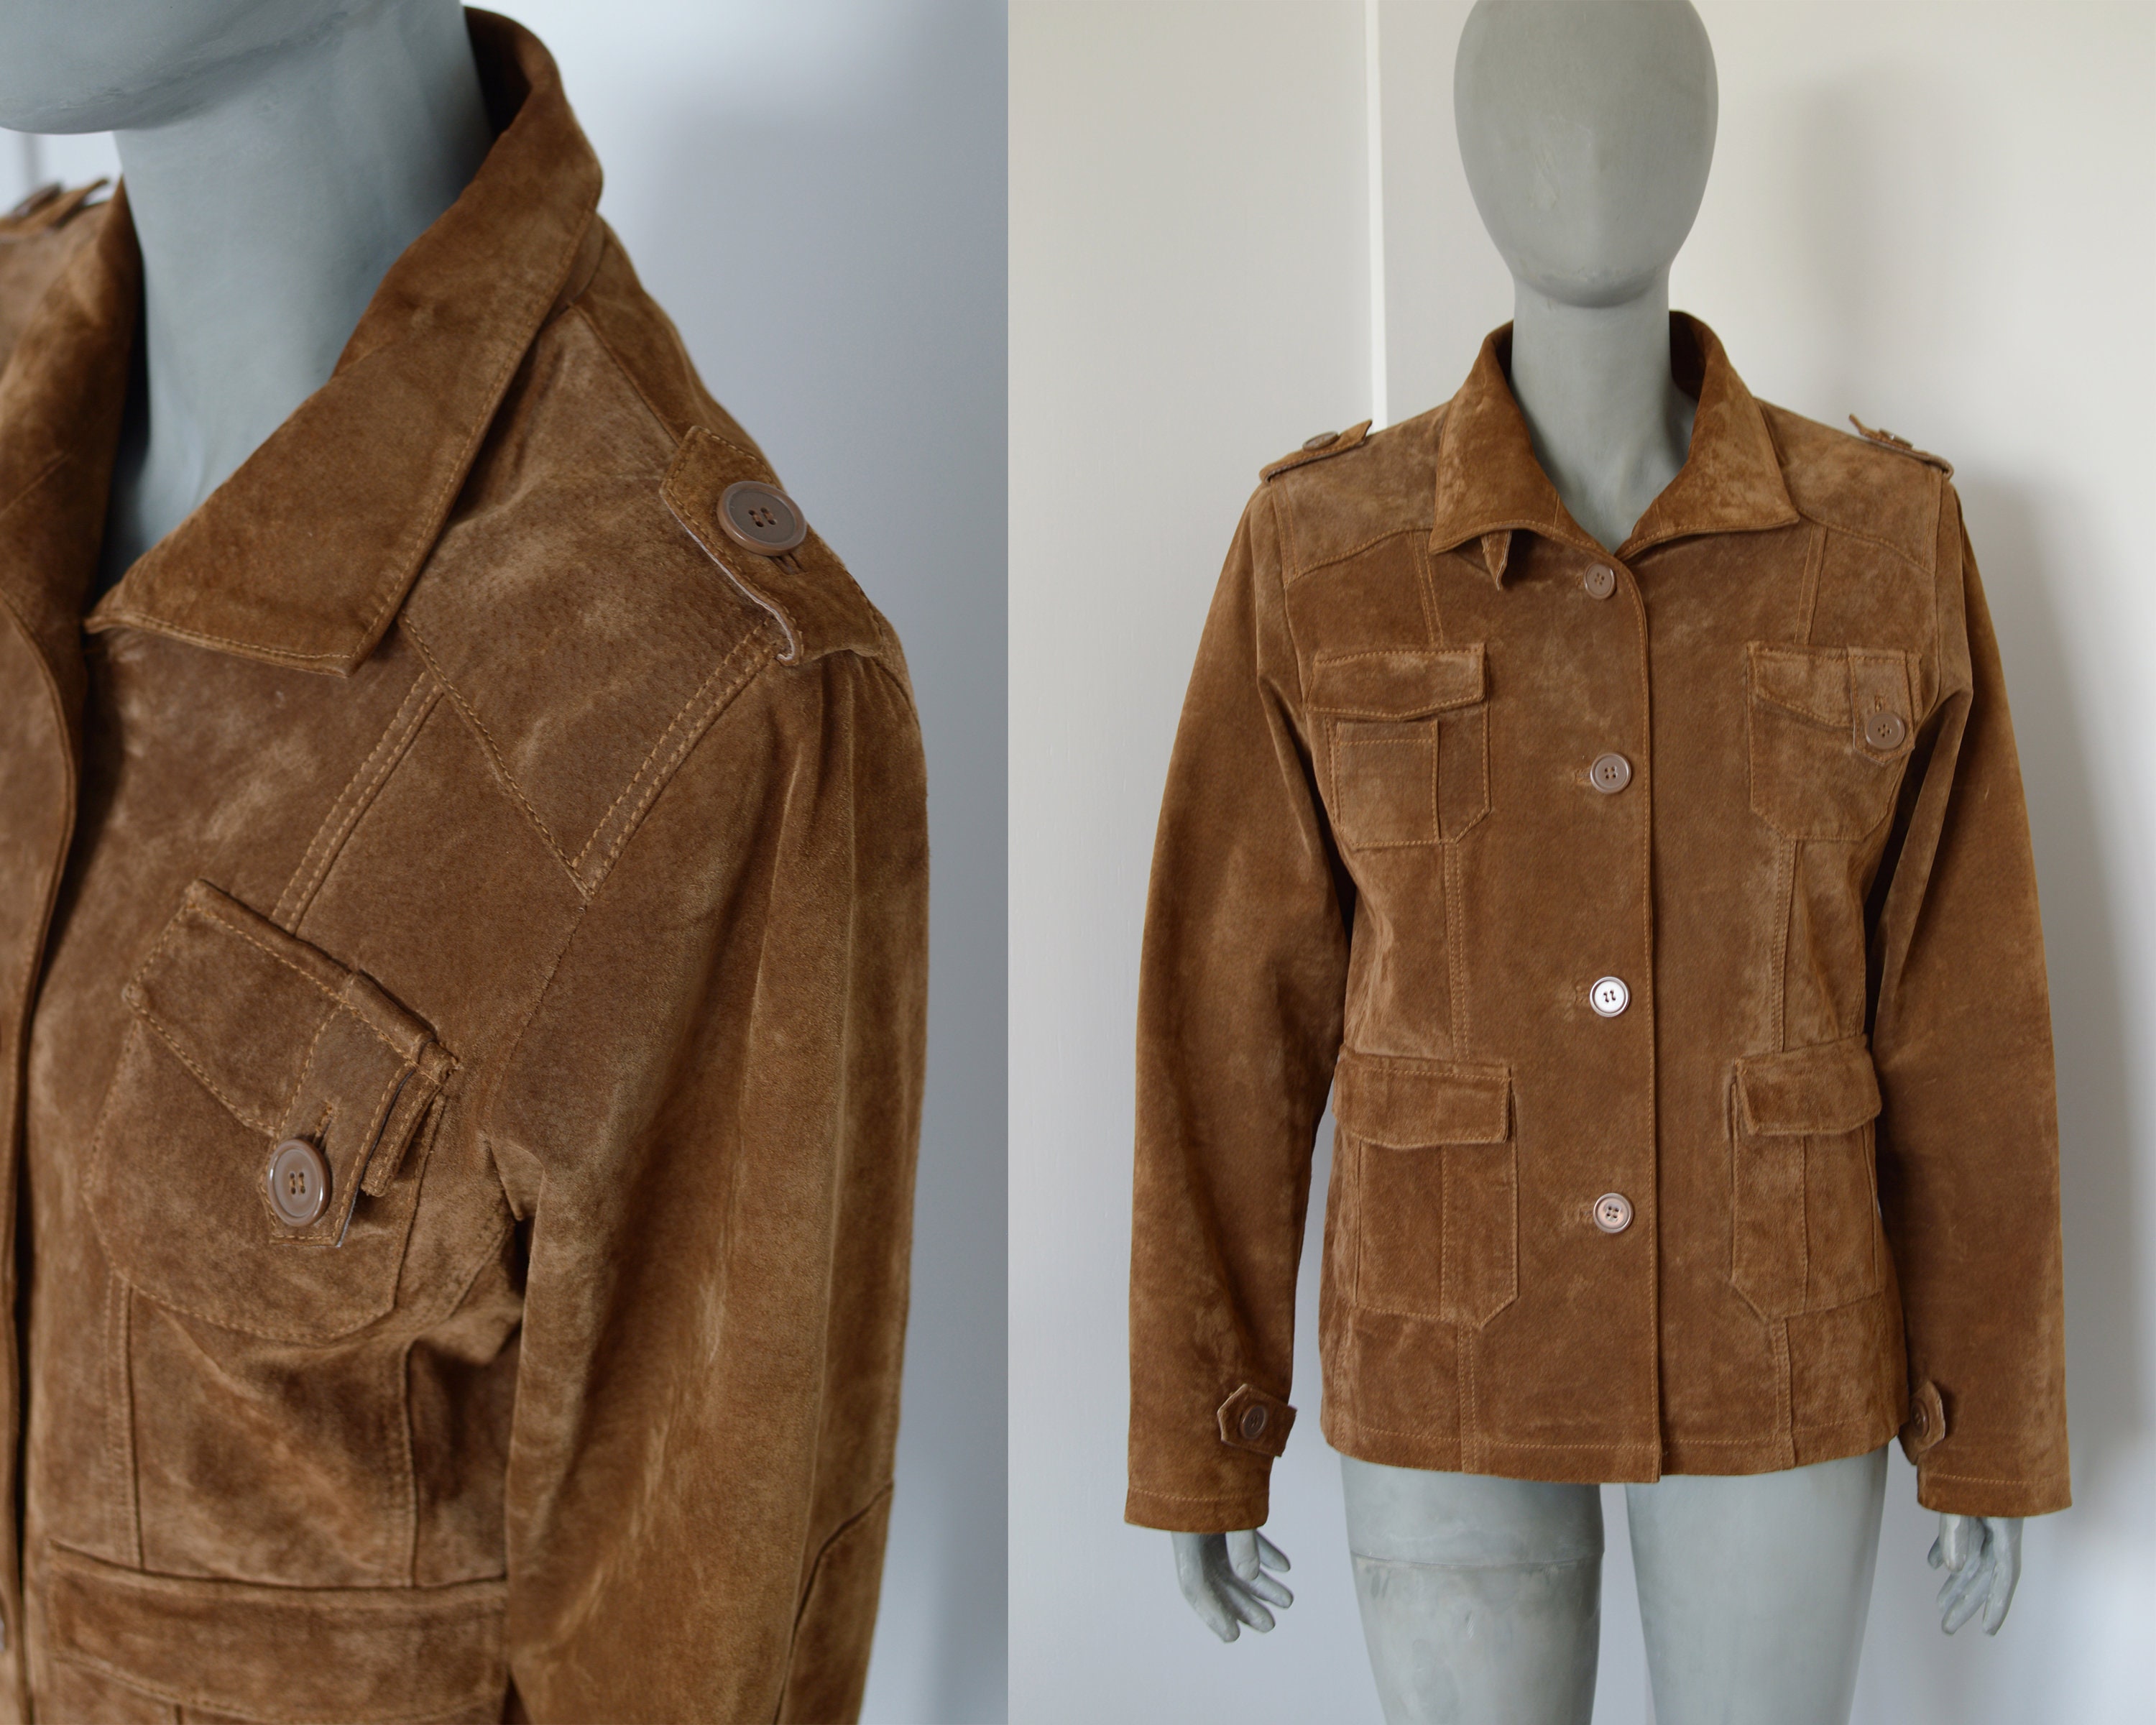 Vinatge MONTEGO real suede leather jacket Tan leather jacket | Etsy